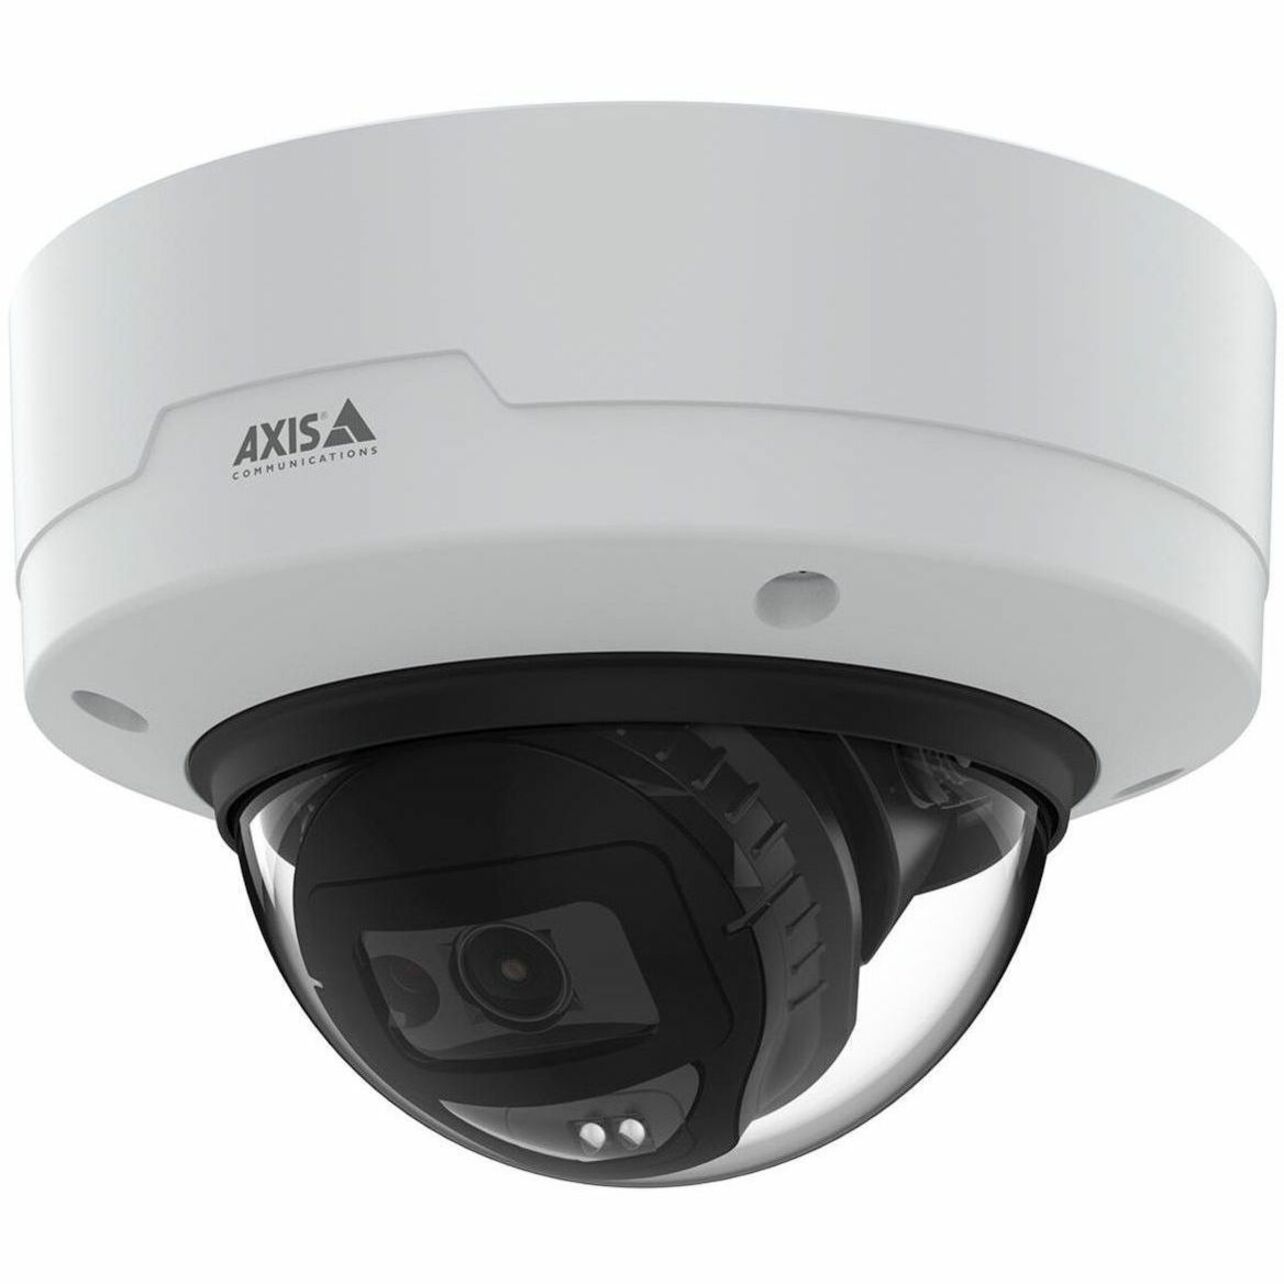 AXIS 02372-001 M3216-Lve Surveillance Camera, Color Dome